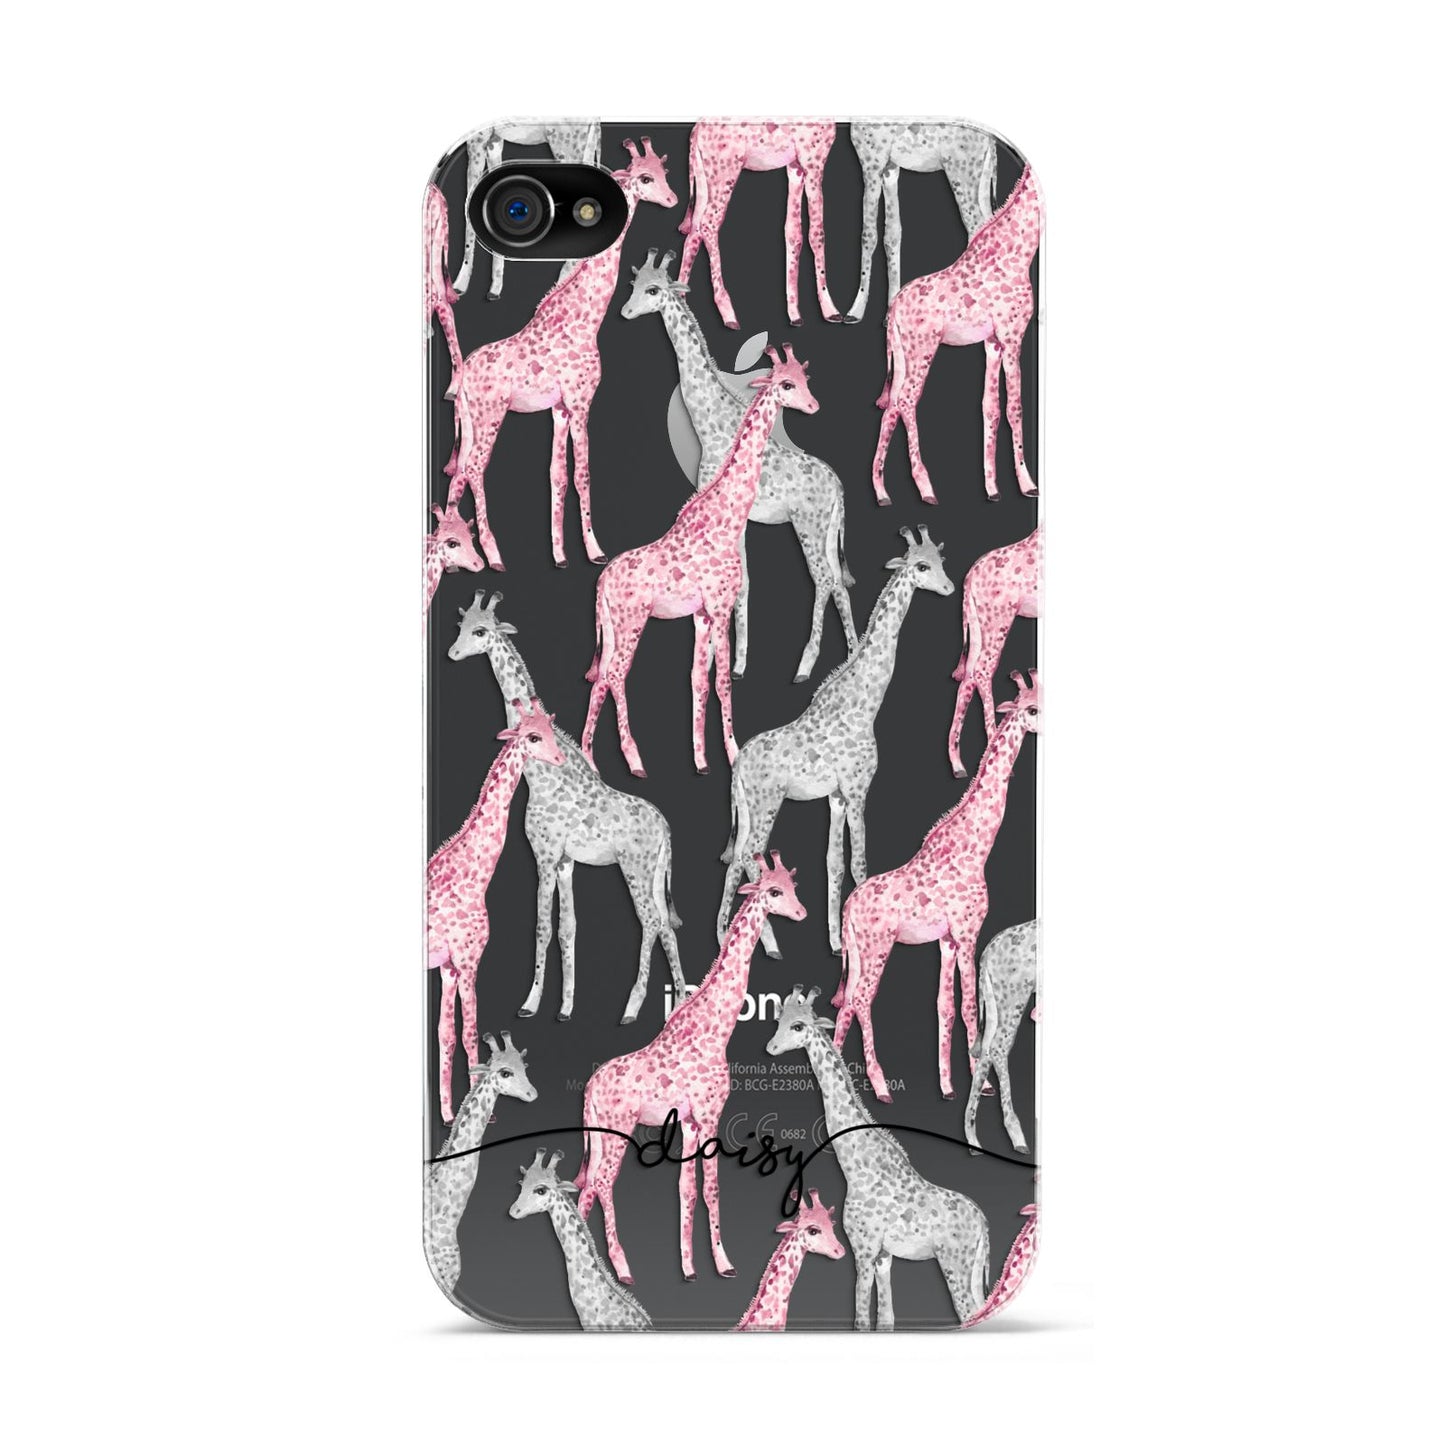 Personalised Pink Grey Giraffes Apple iPhone 4s Case